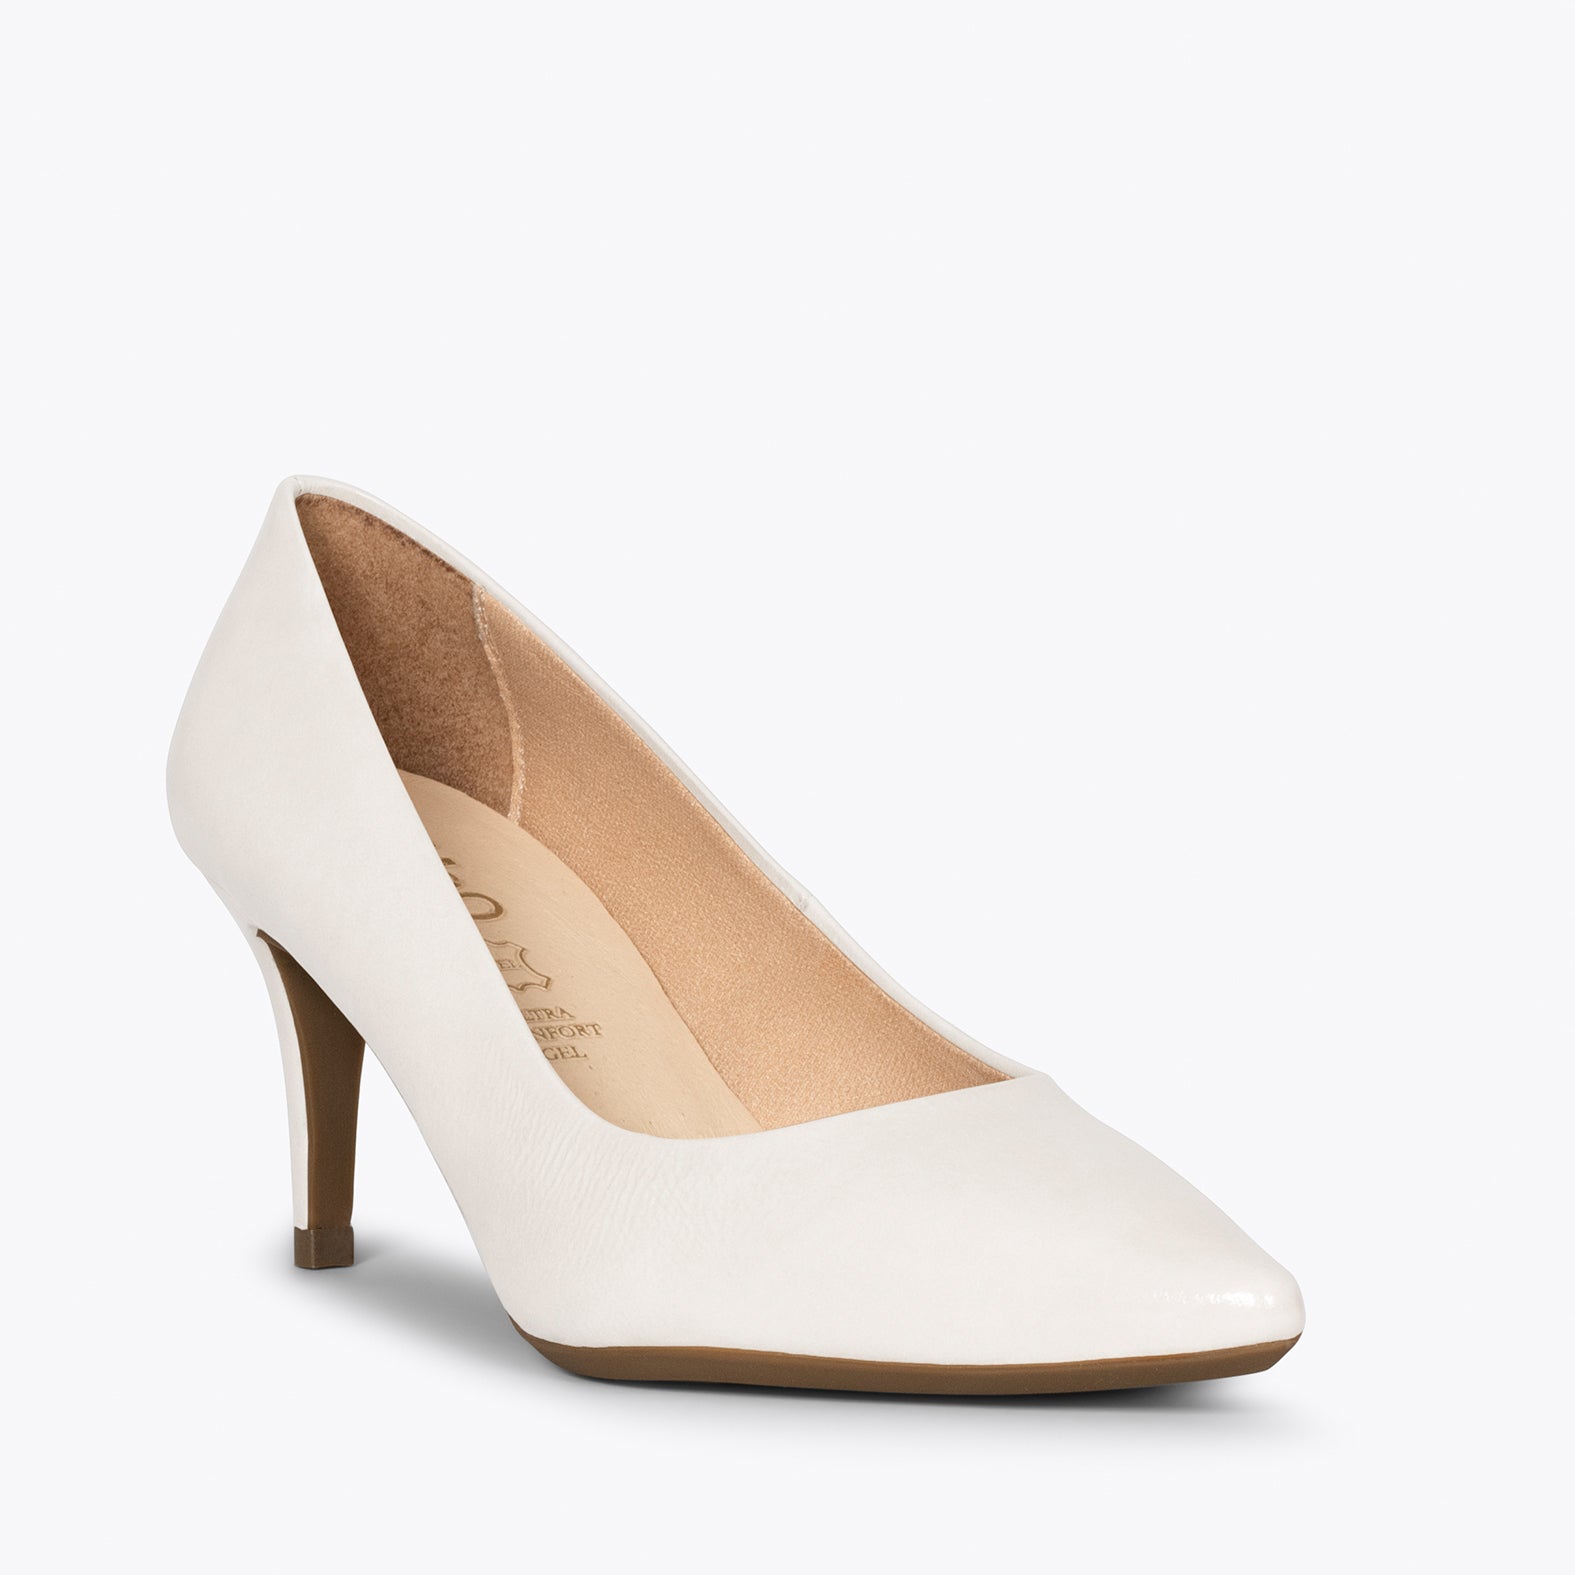 STILETTO PATENT – WHITE patent leather stiletto heel